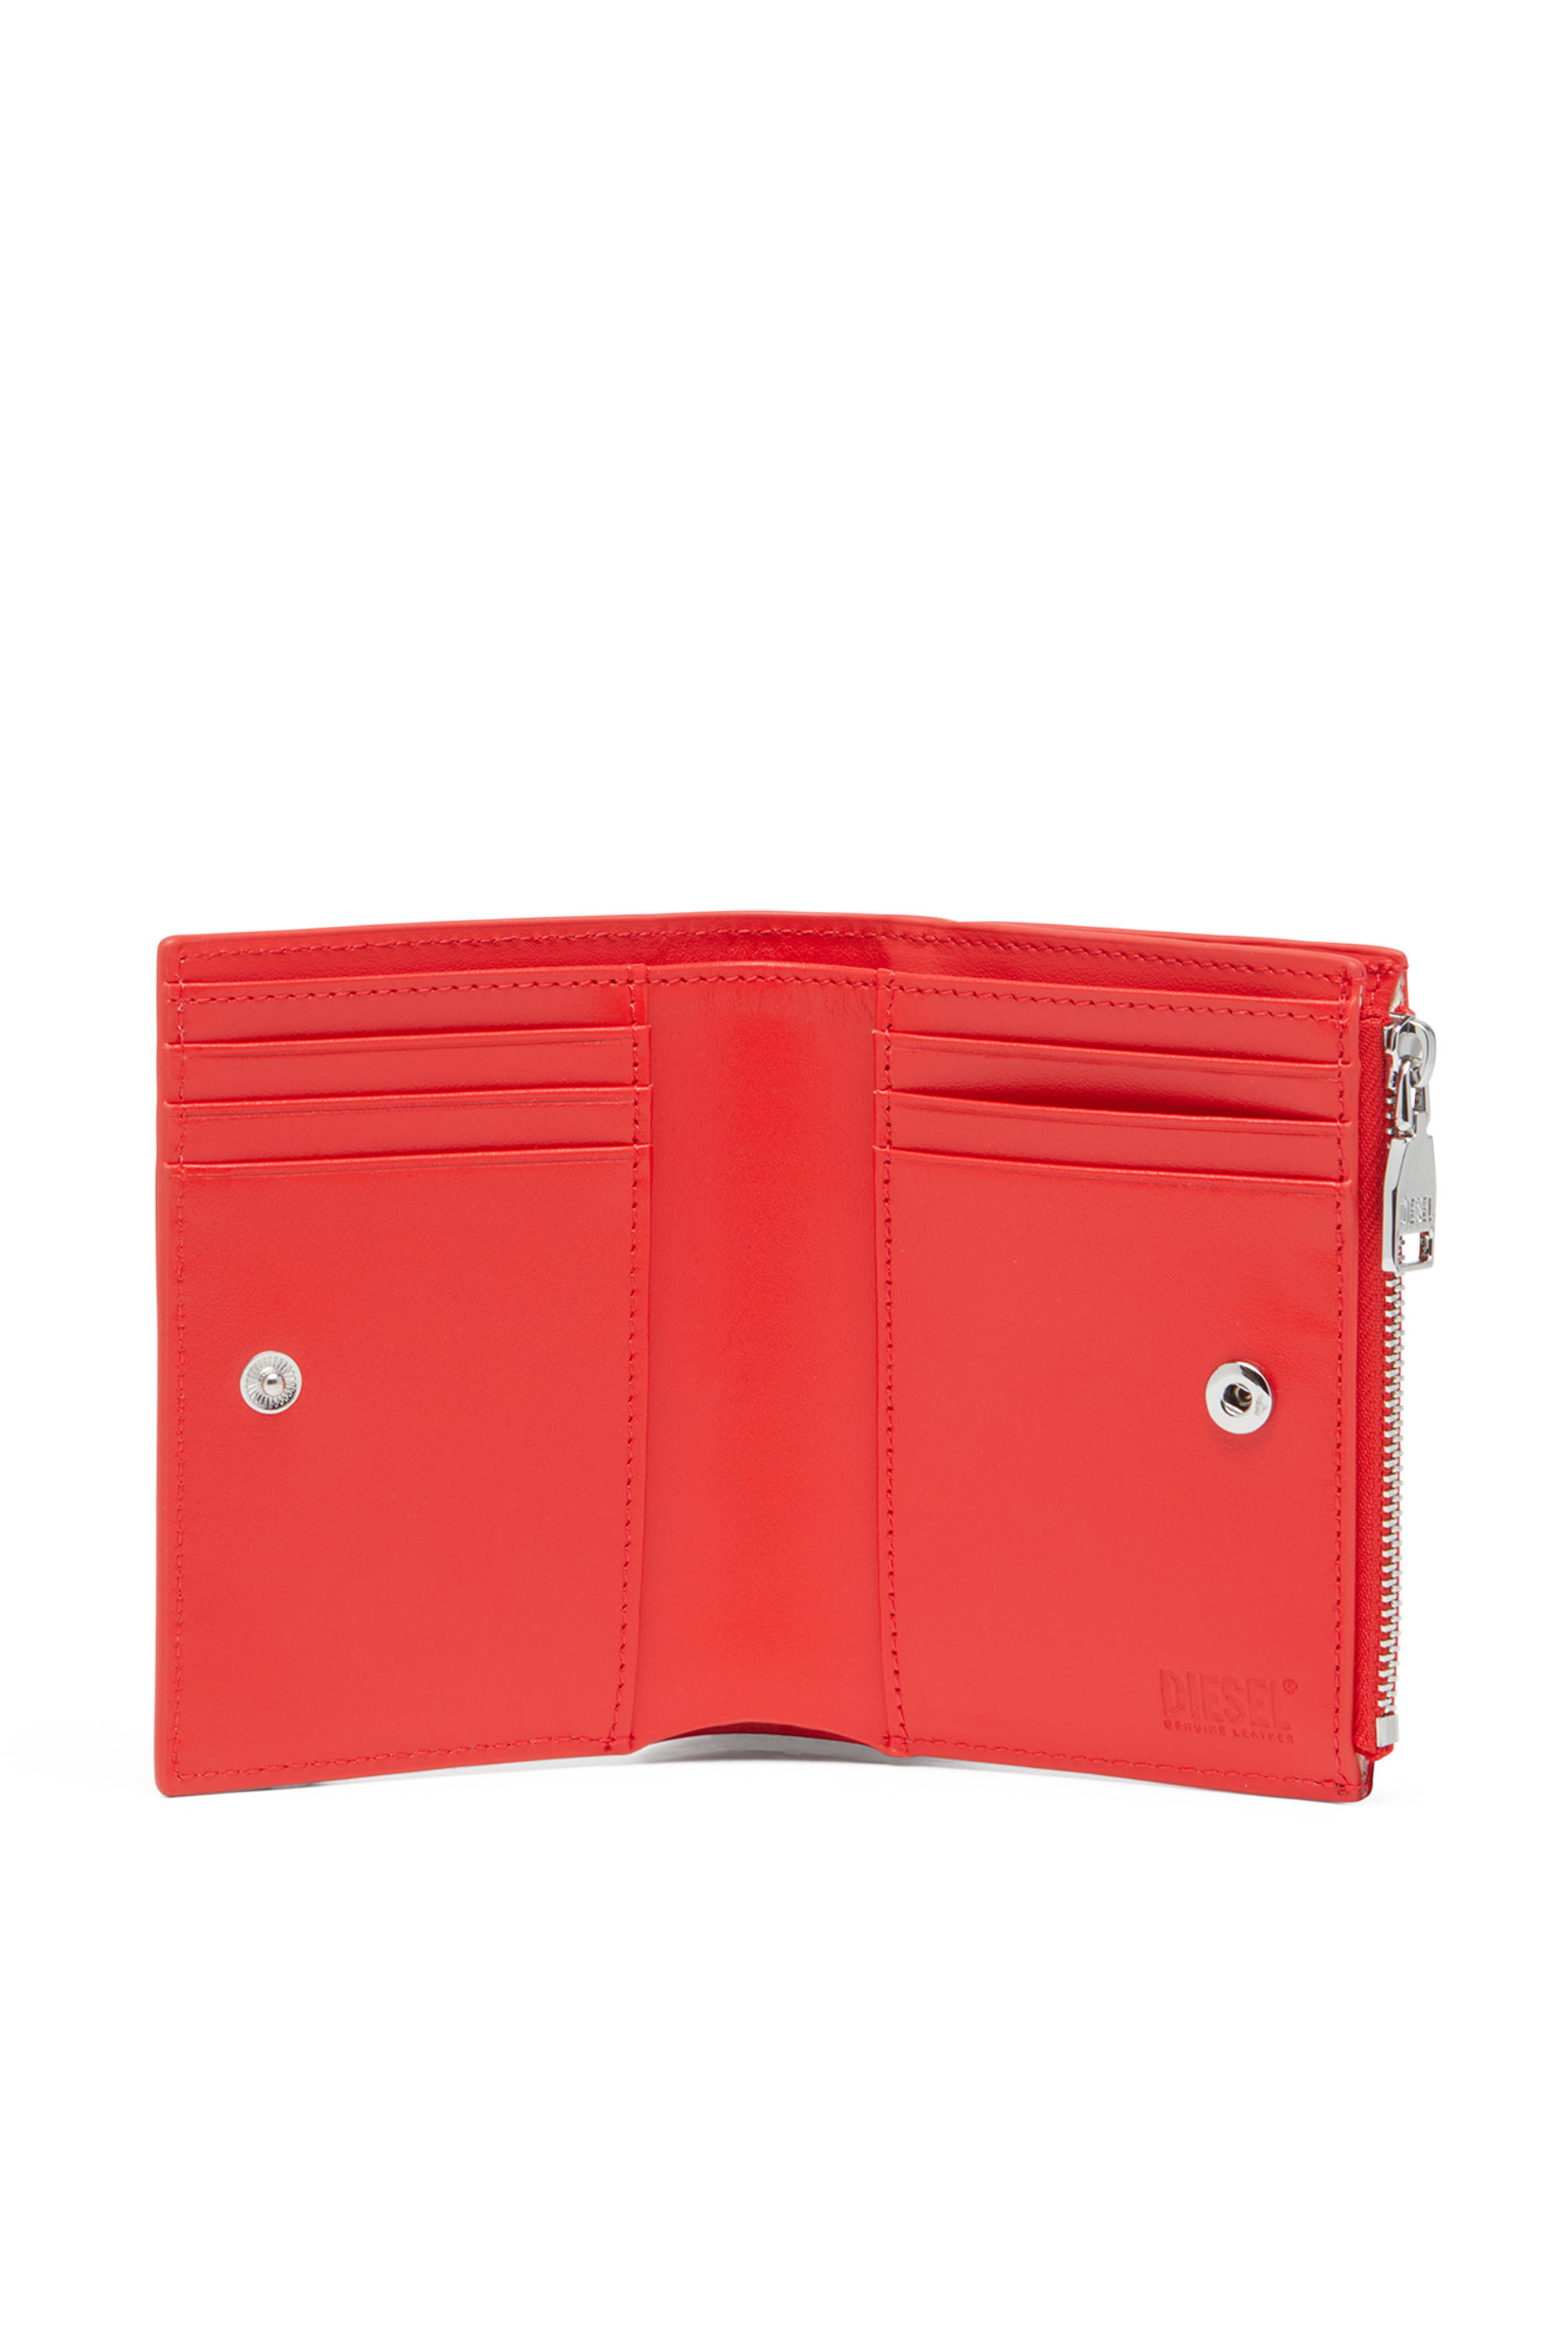 Diesel - PLAY BI-FOLD ZIP II, Female Small wallet in glossy leather in レッド - Image 3